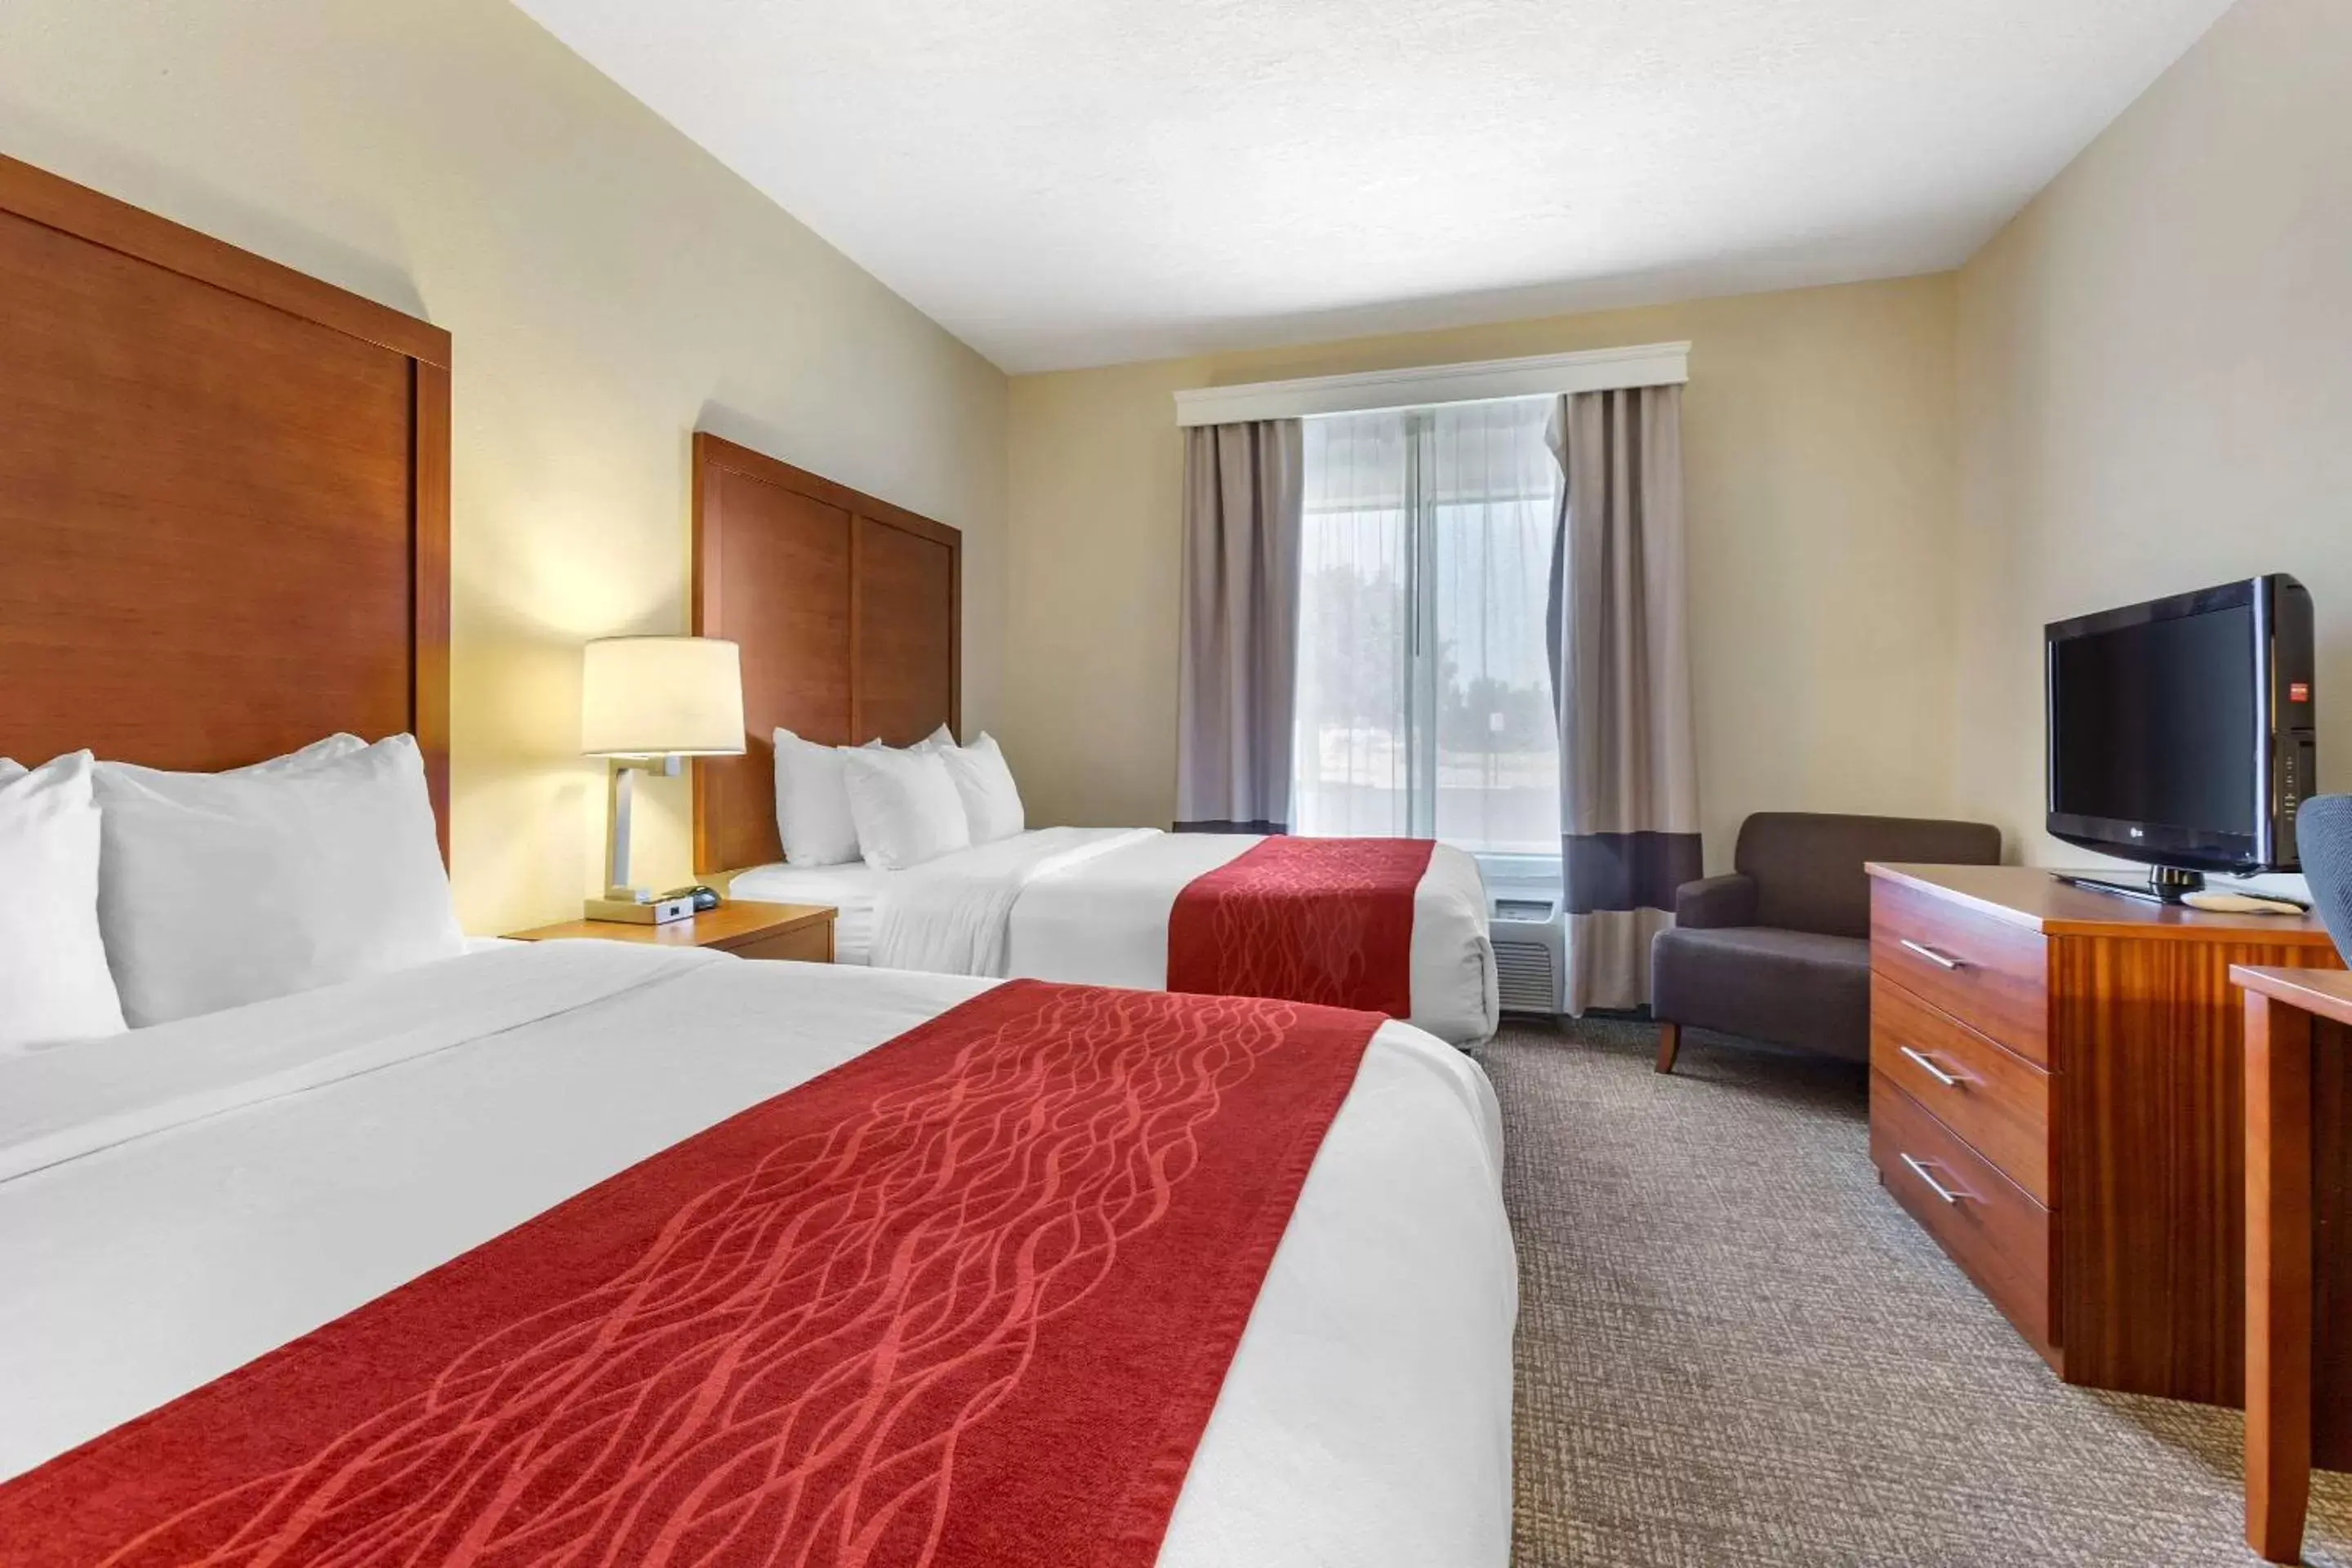 Bed, Room Photo in Comfort Inn & Suites Socorro